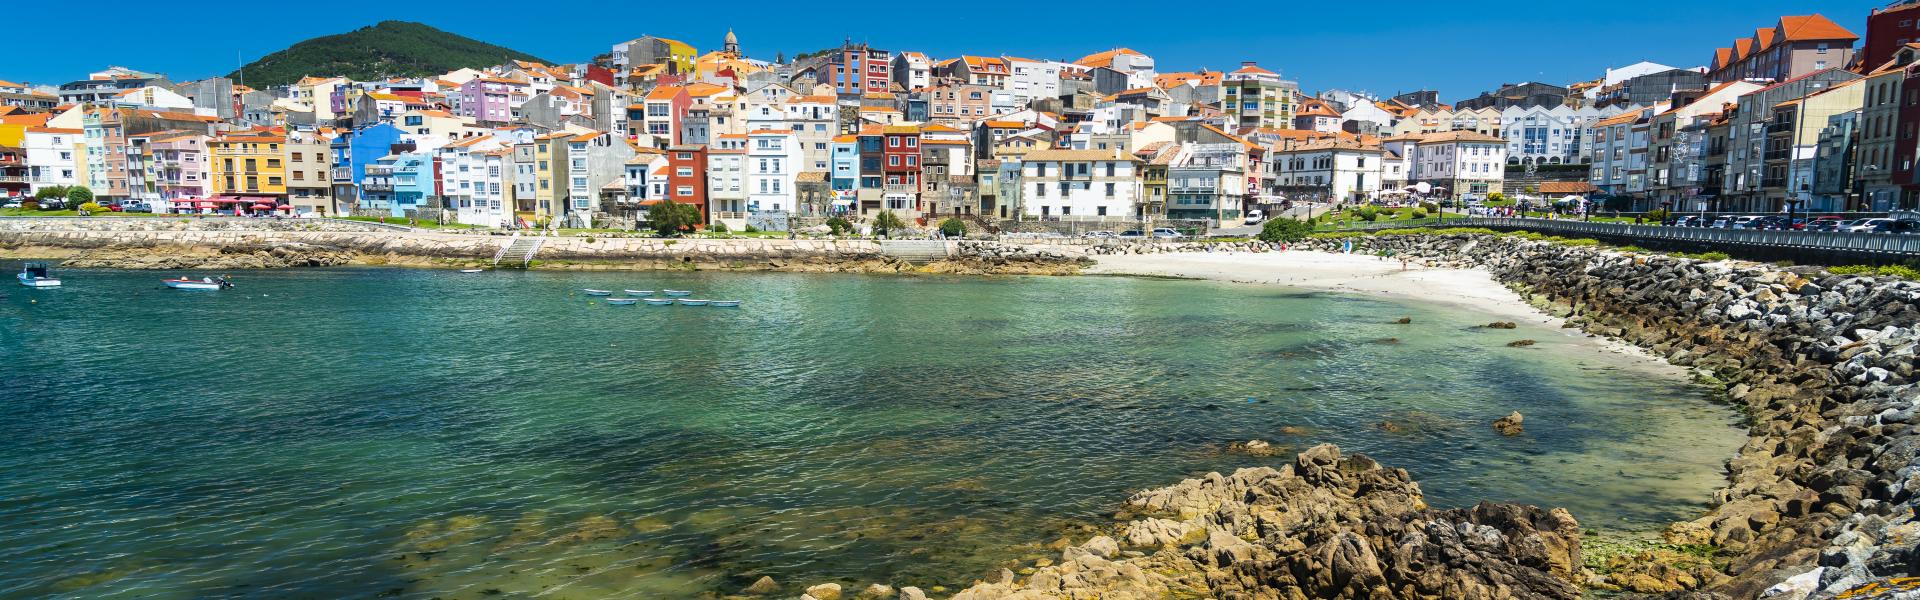 Pontevedra Scenic View